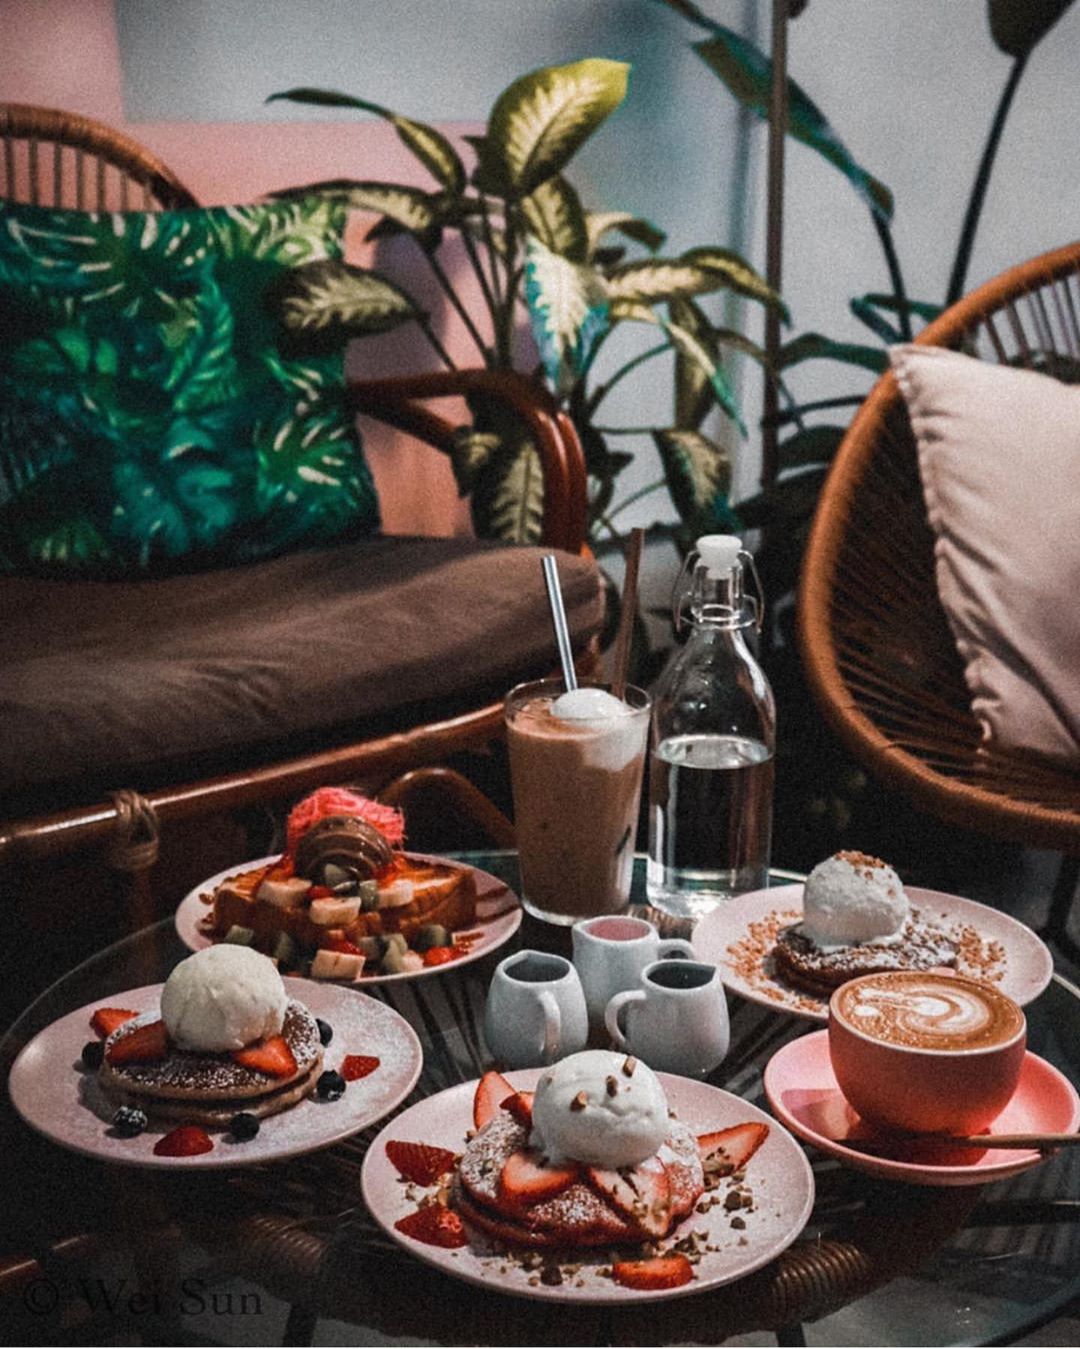 Penang Cafes - Matcho Cafe pancakes